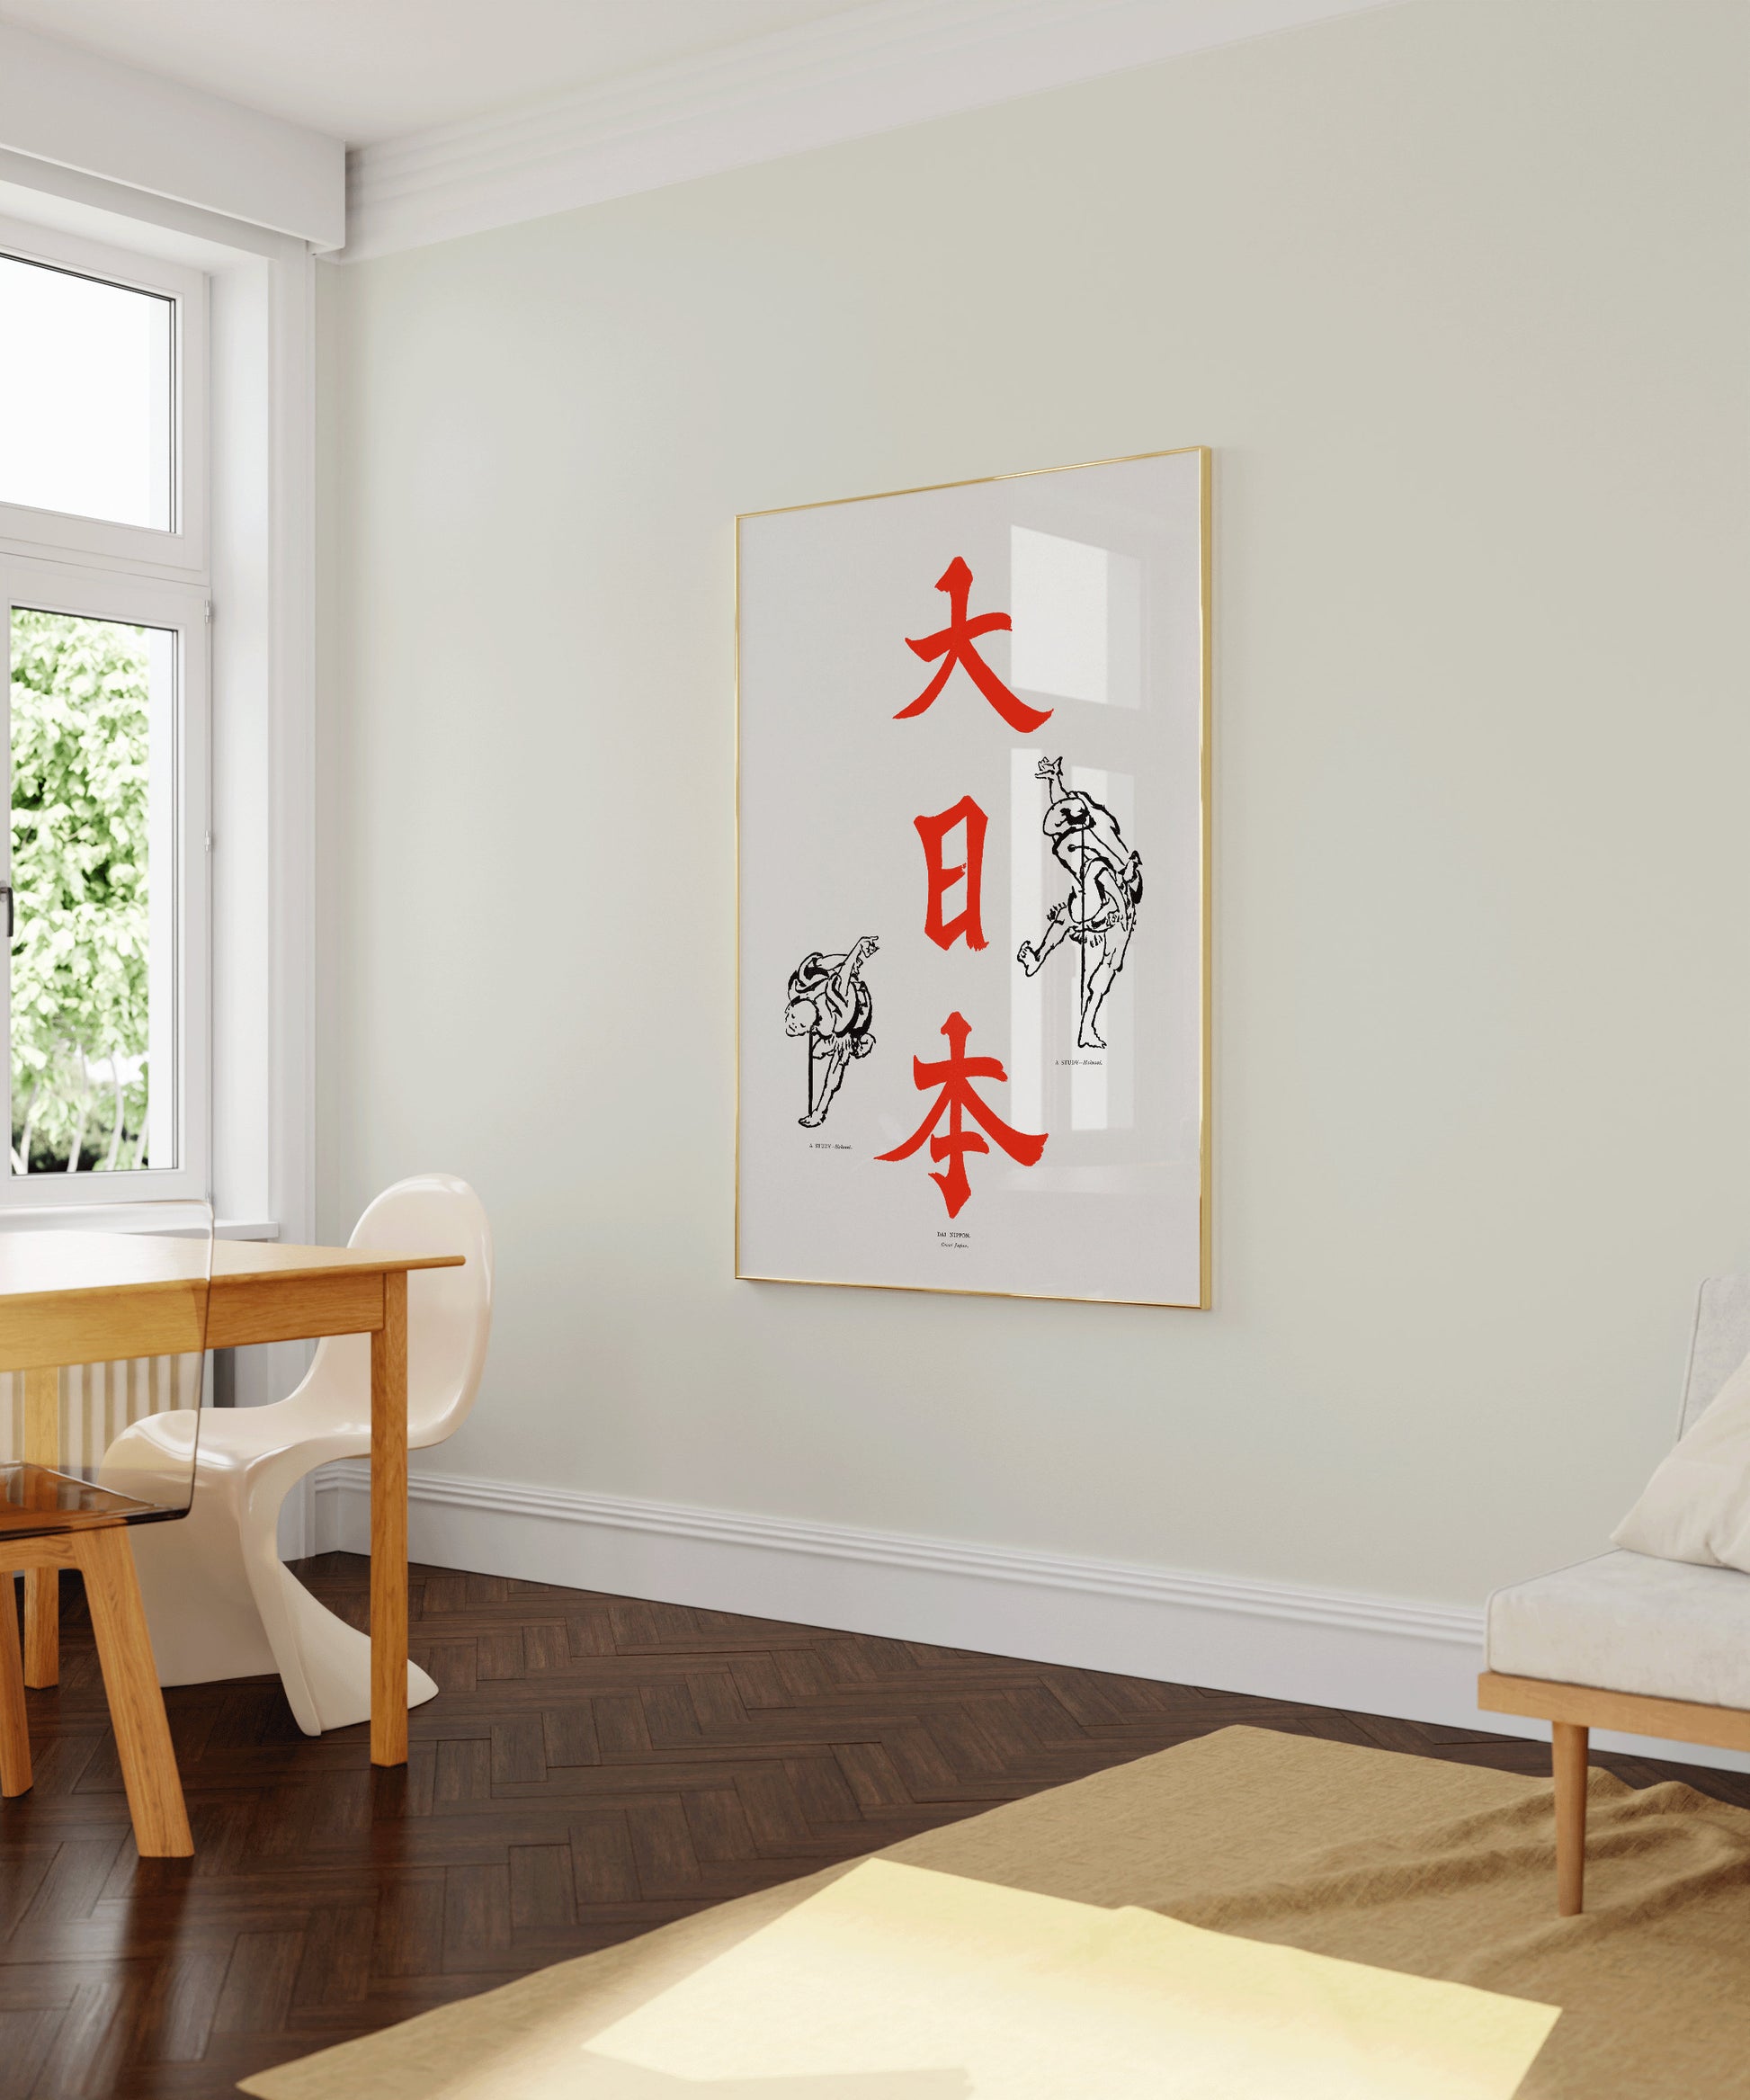 Framed Katsuhika Hokusai Dai Nippon (Great Japan) Poster Japanese red art Ukiyo-e Shin Hanga Museum Ready to Hang Home Office Decor Print